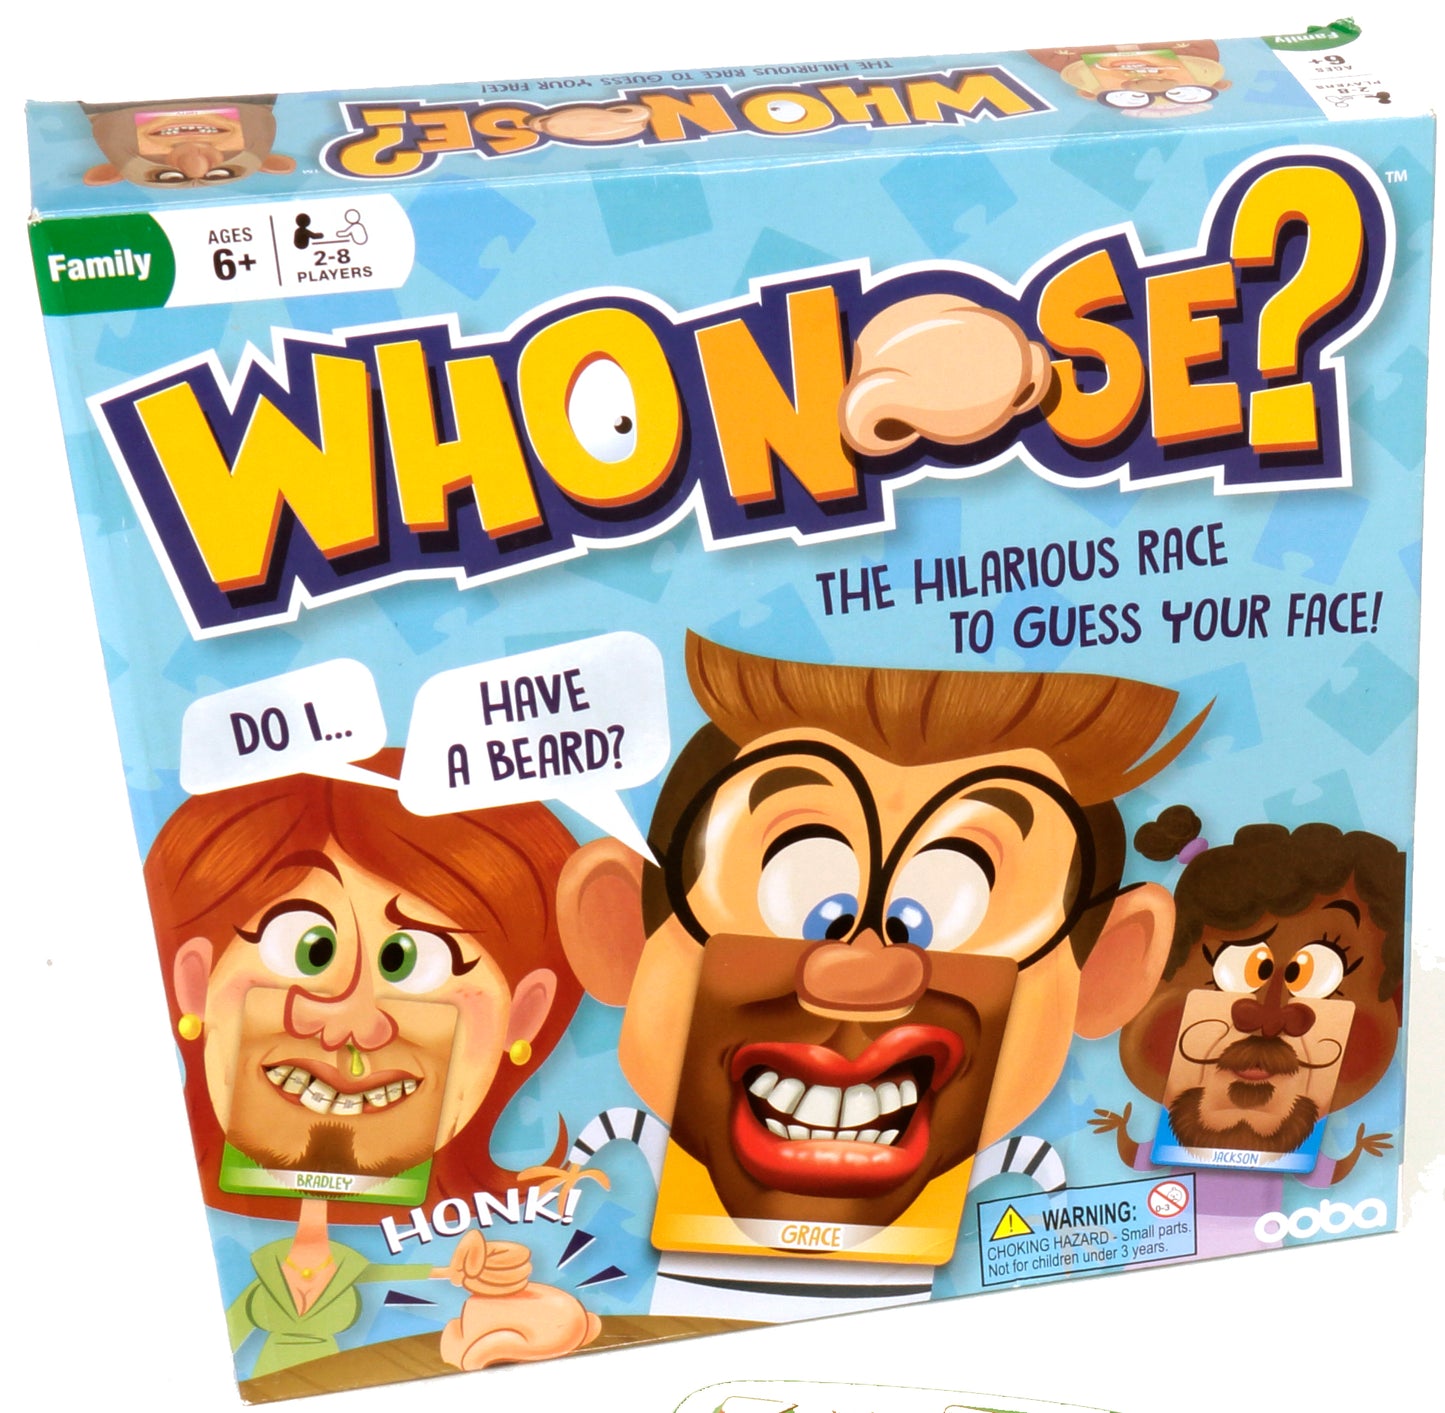 Who Nose?